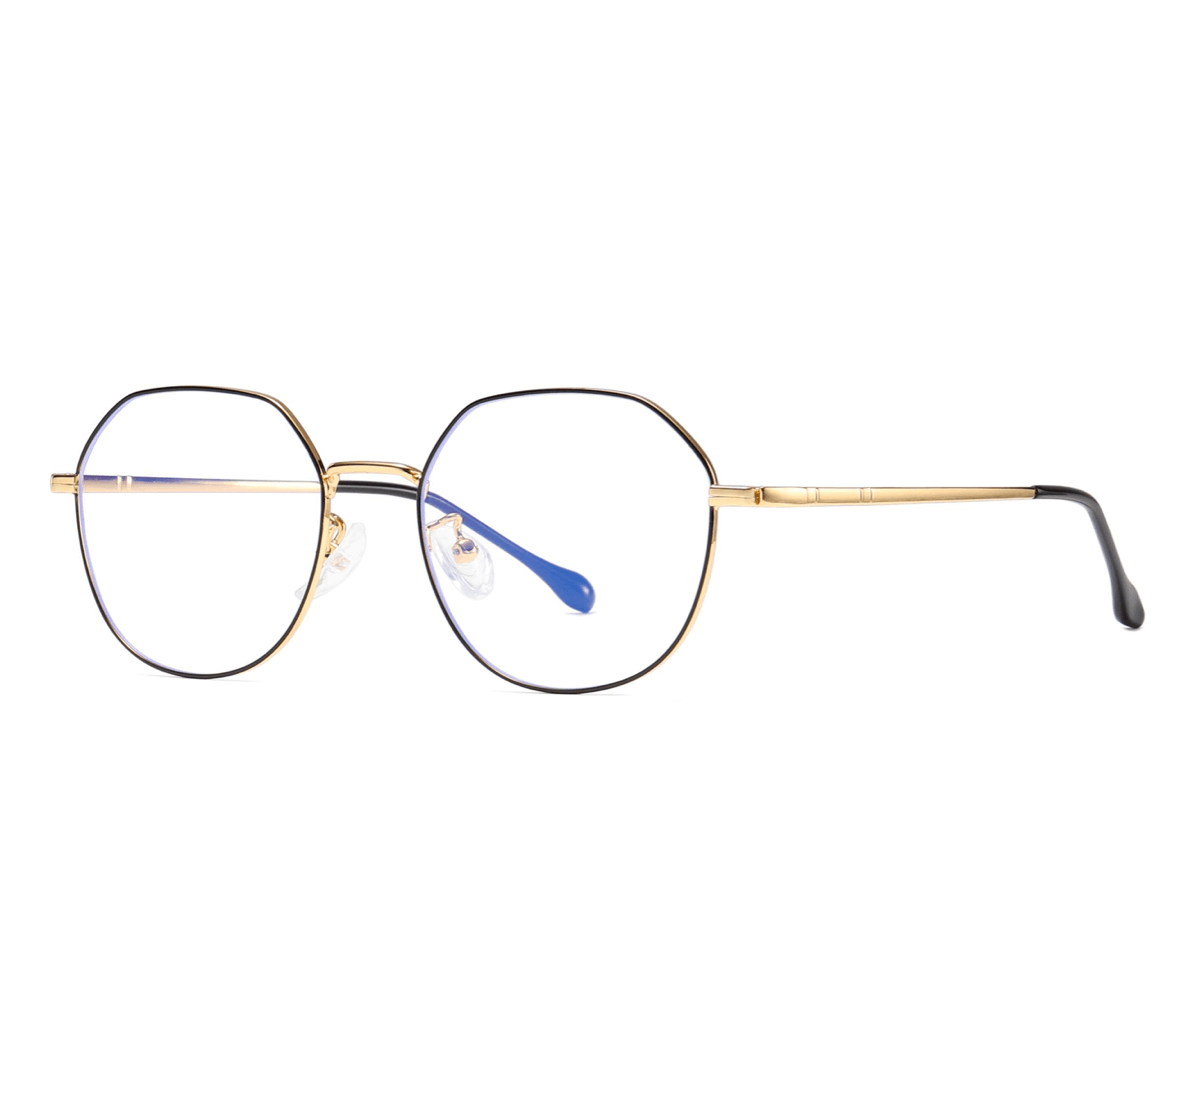 Fashion Metal wholesale computer glasses, blue light glasses China, blue light glasses manufacturer, blue light glasses supplier